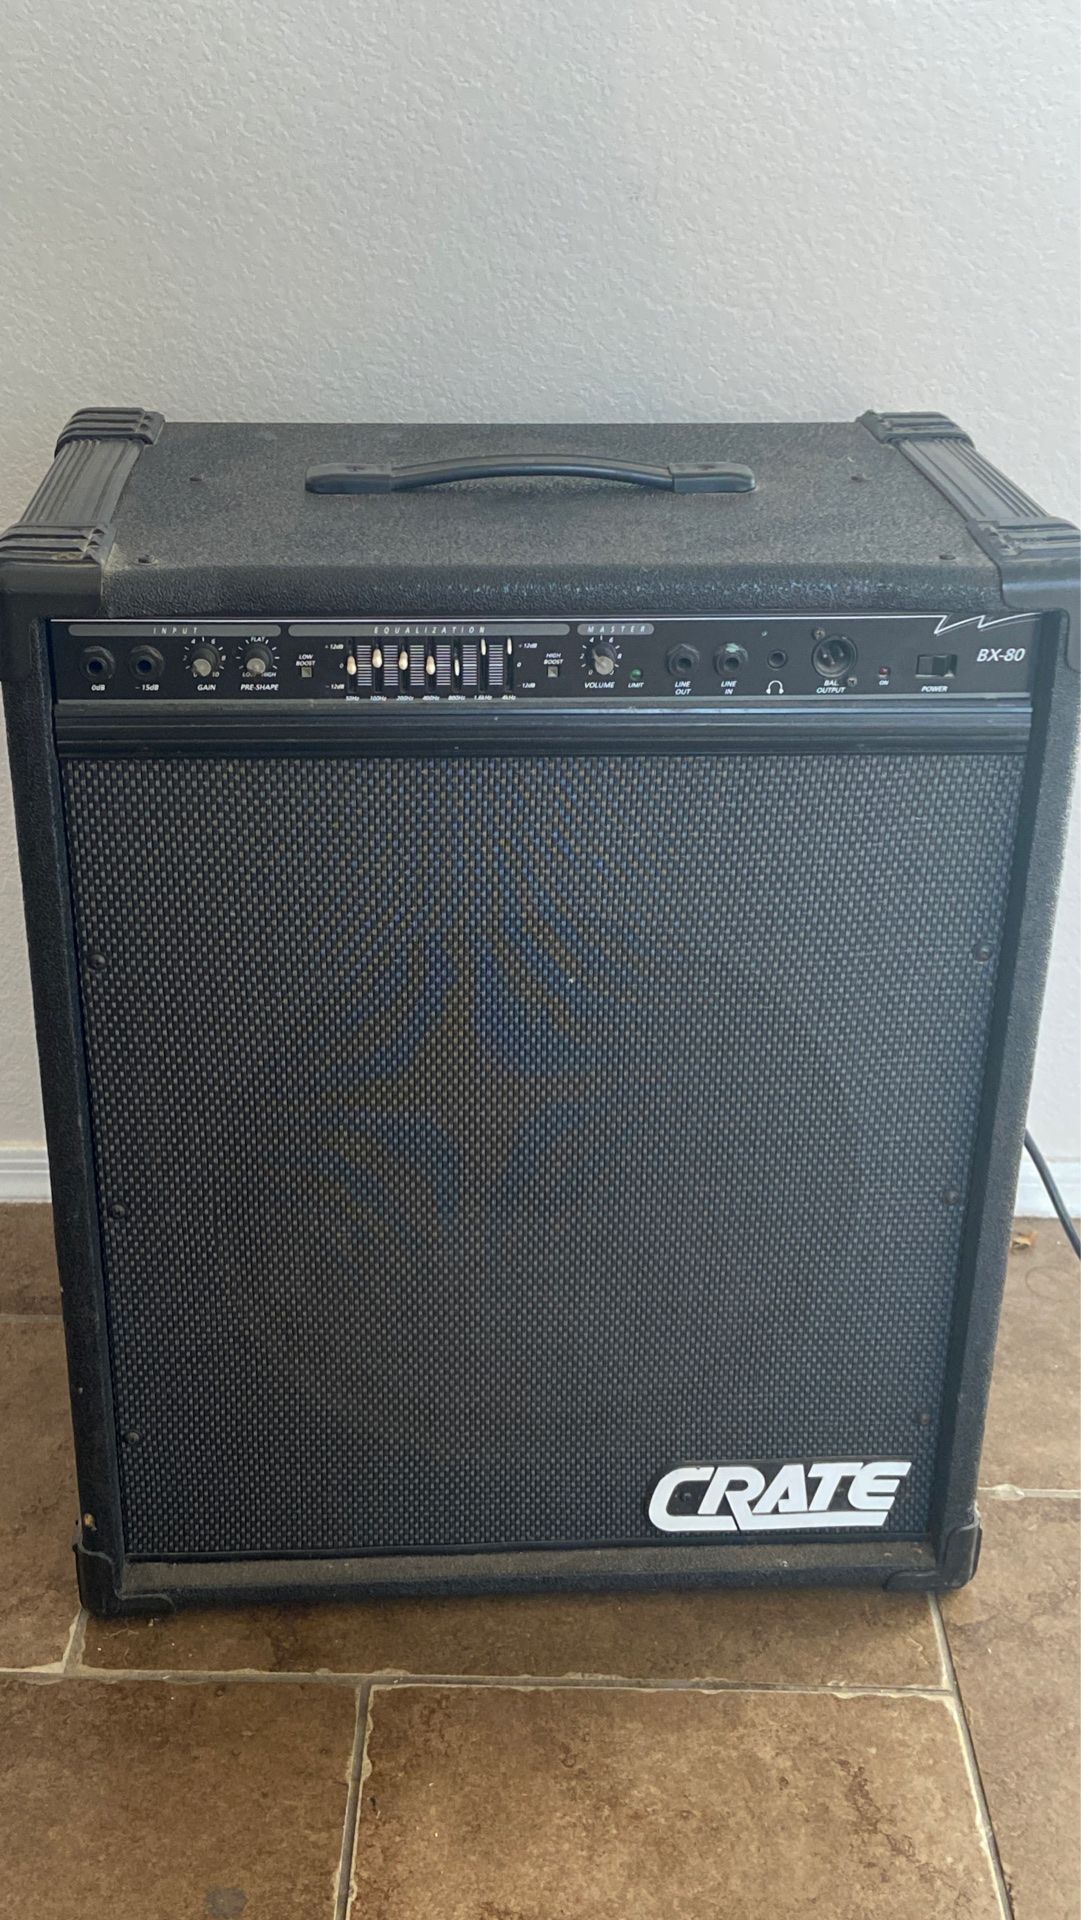 Crate BX-80 bass guitar amplifier 30x20in